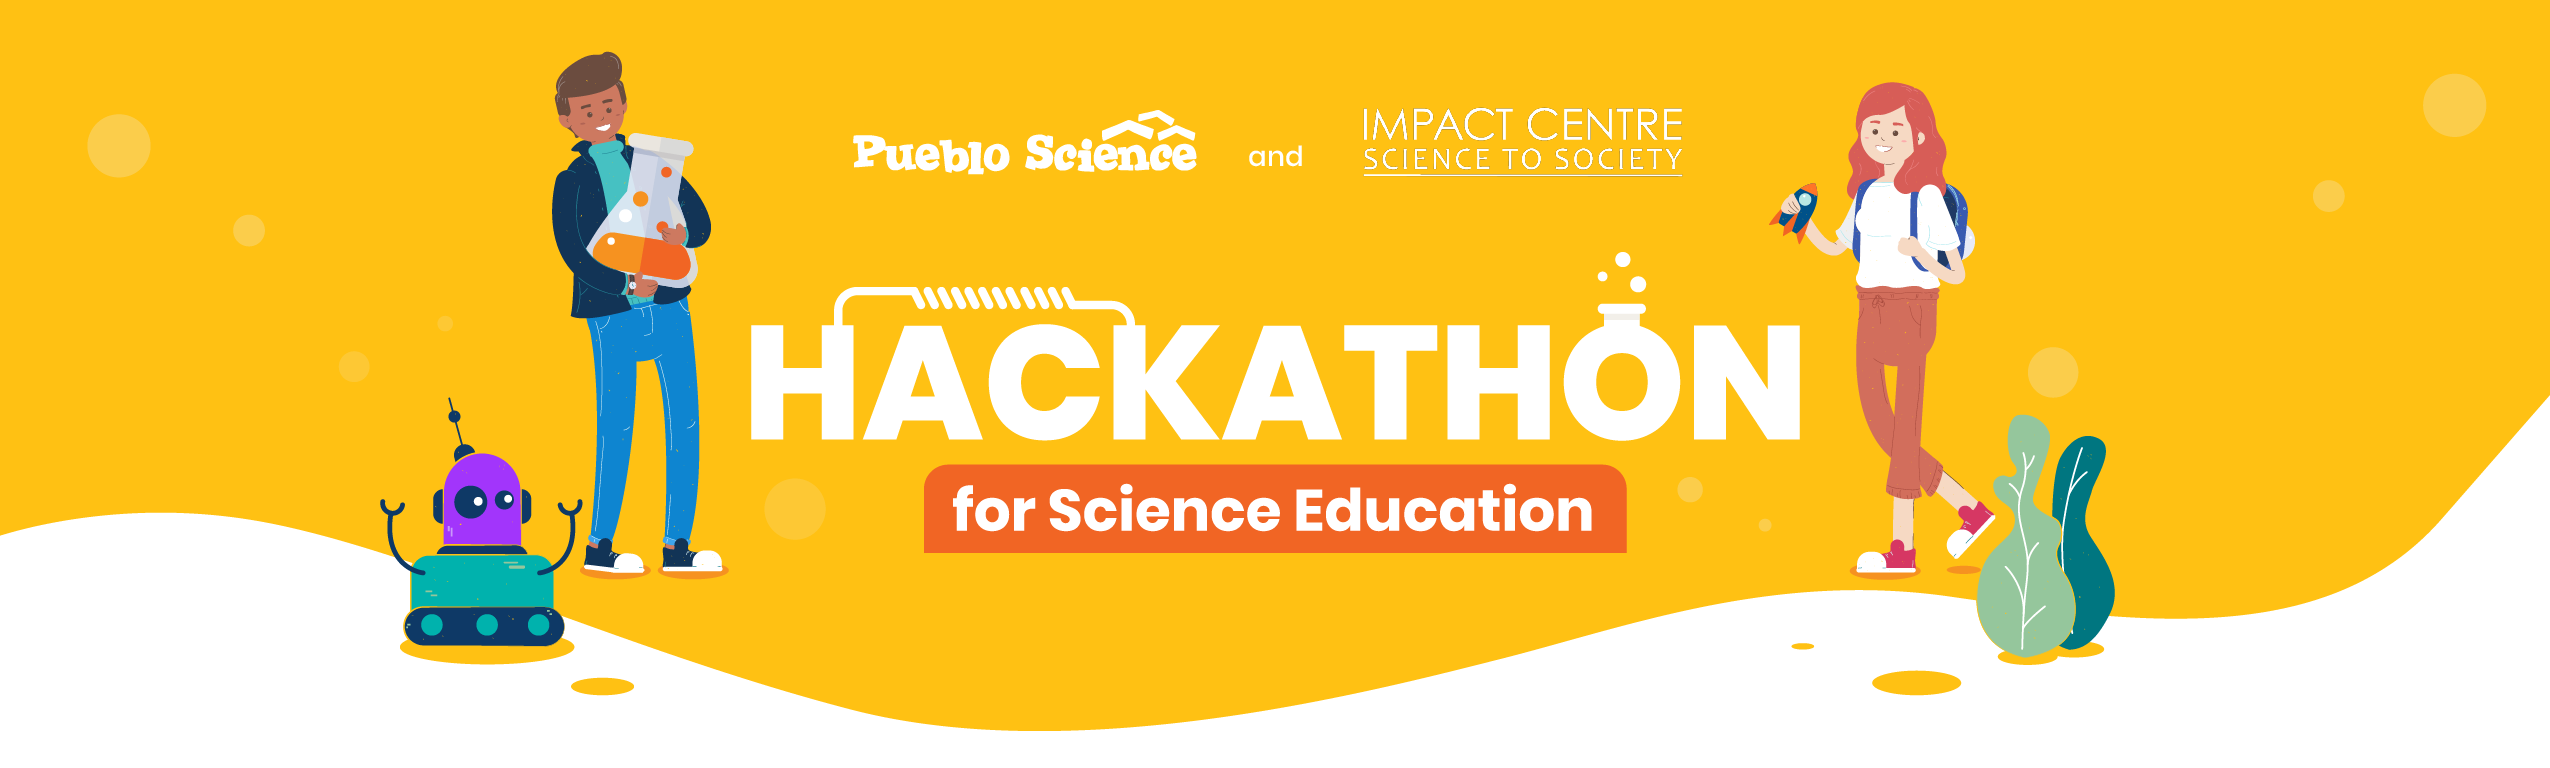 Hackathon for Science Education Header